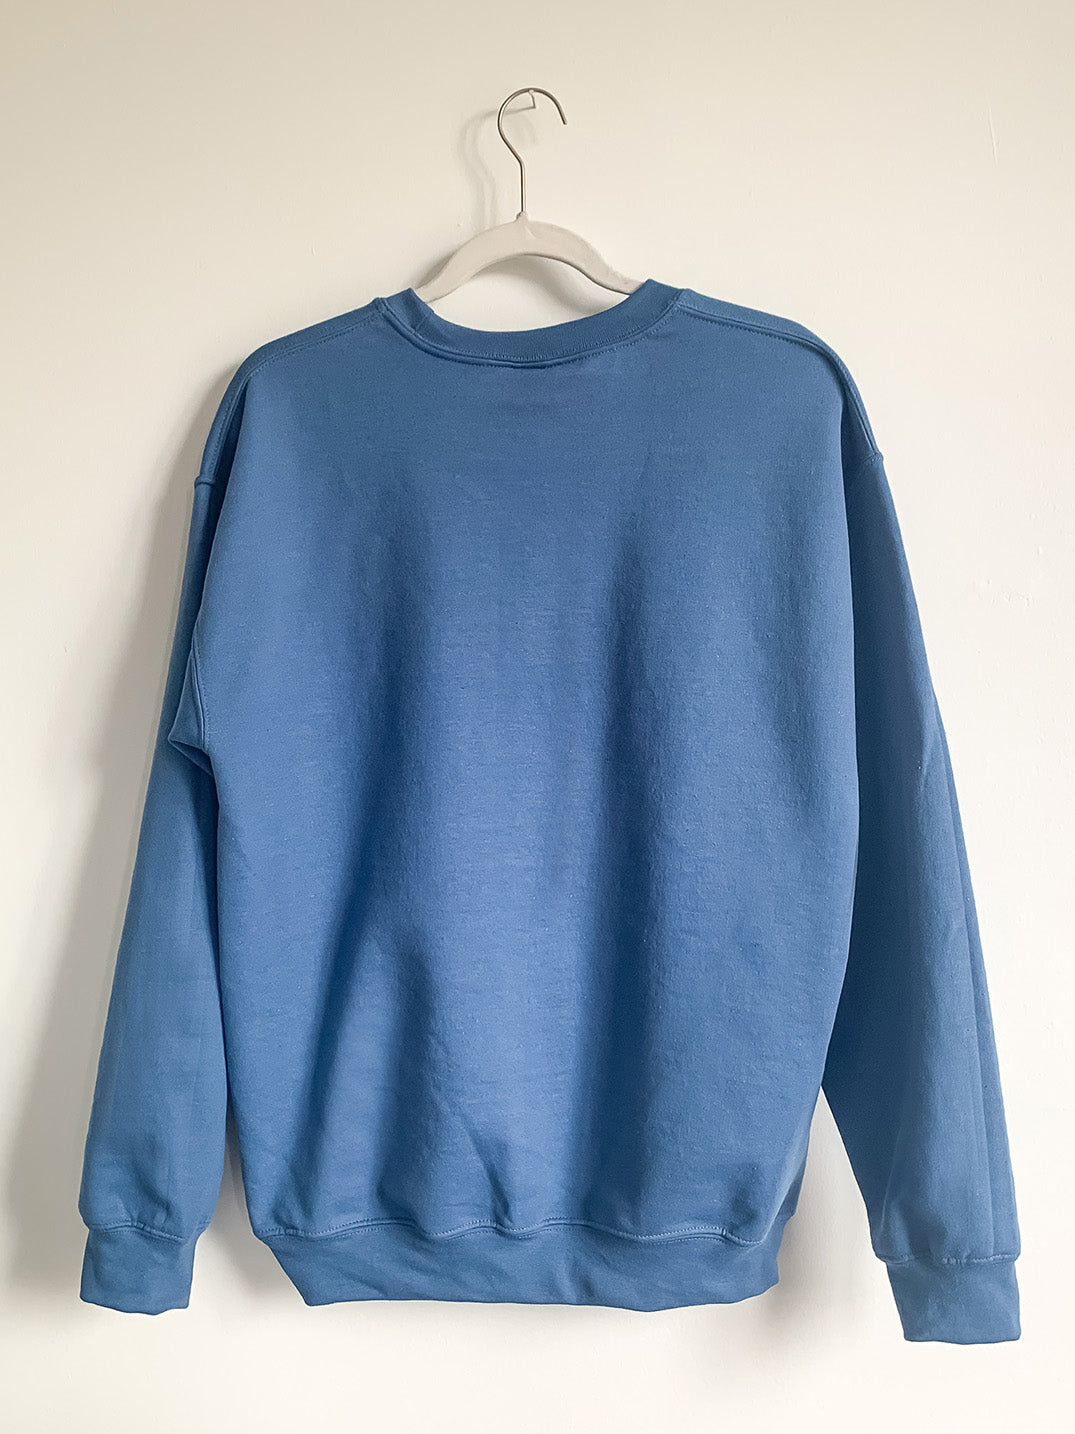 Back of hanging indigo blue Short North crewneck sweatshirt.